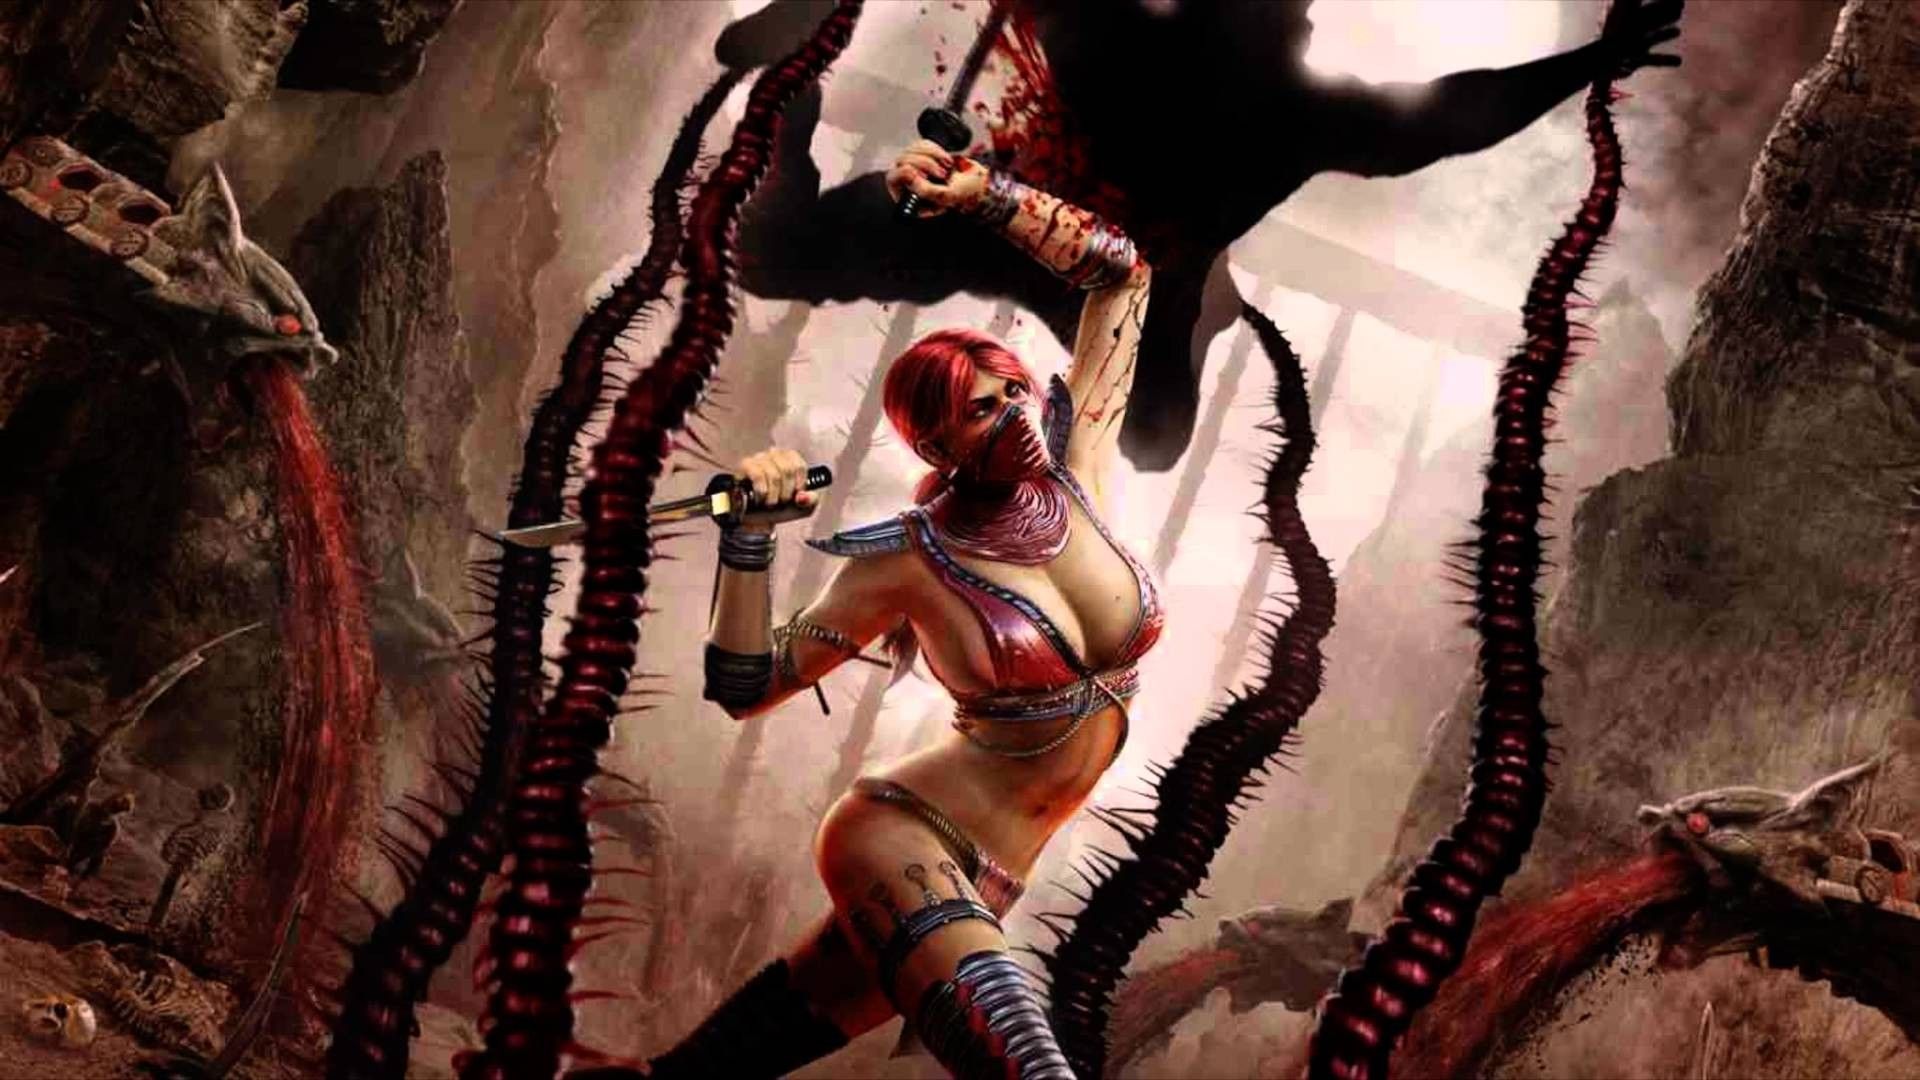 Wallpaper, women, creature, mythology, Mortal Kombat screenshot 1920x1080